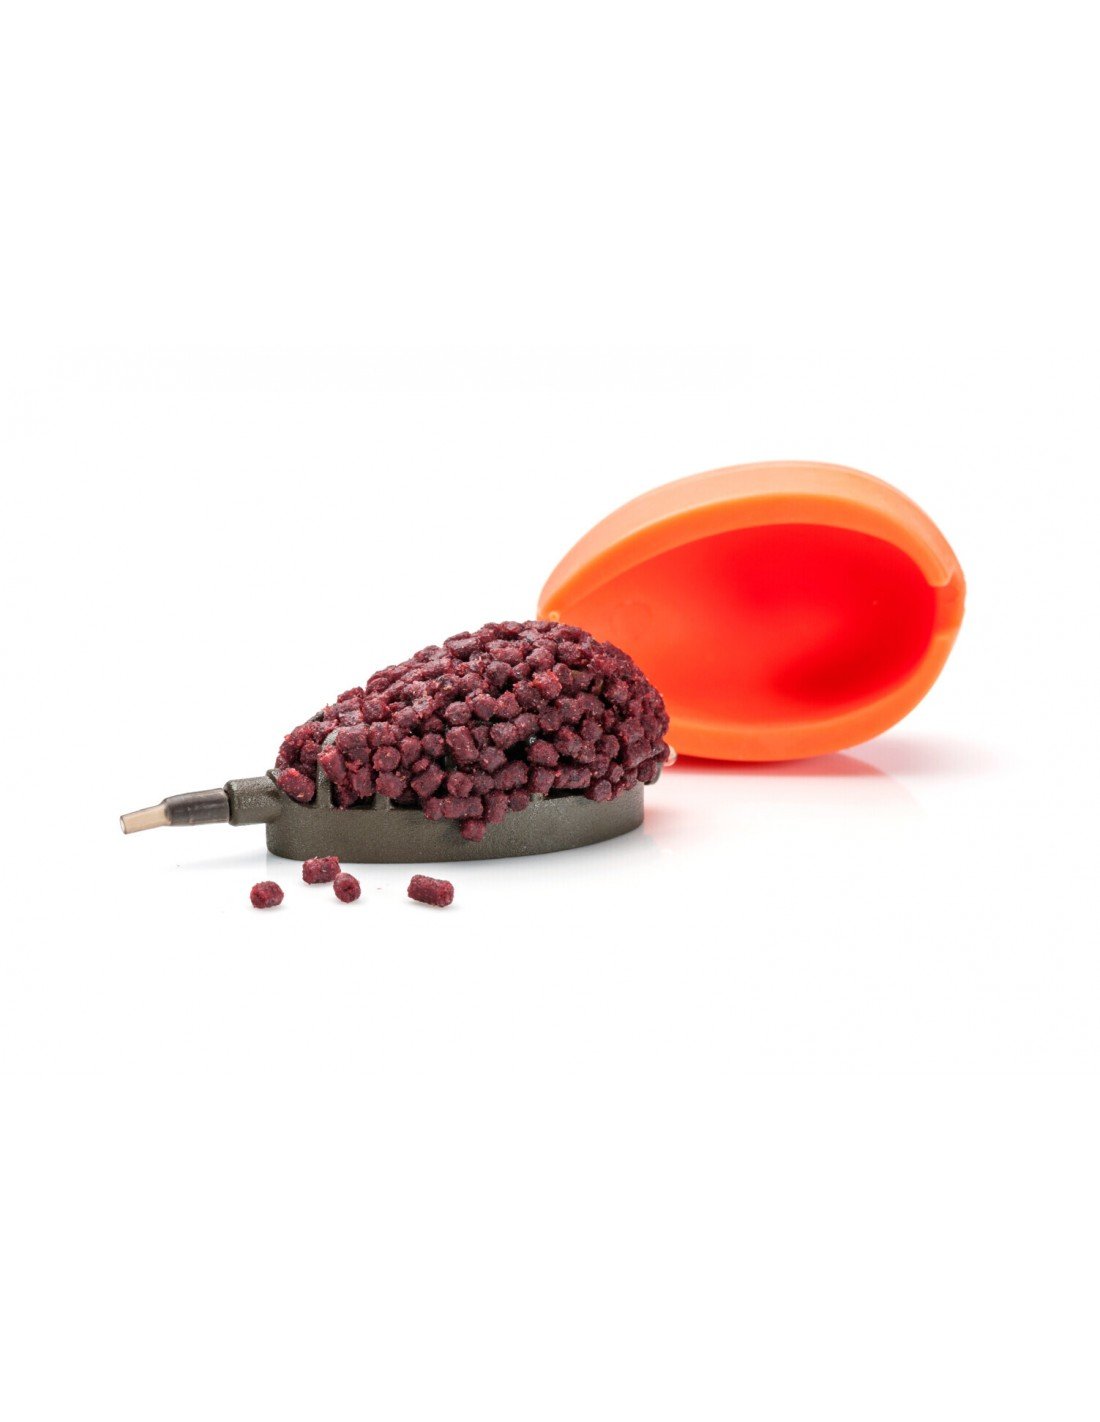 Mivardi Method pellets - Cherry & Fish Protein 2.8mm пелети за фидер или PVA